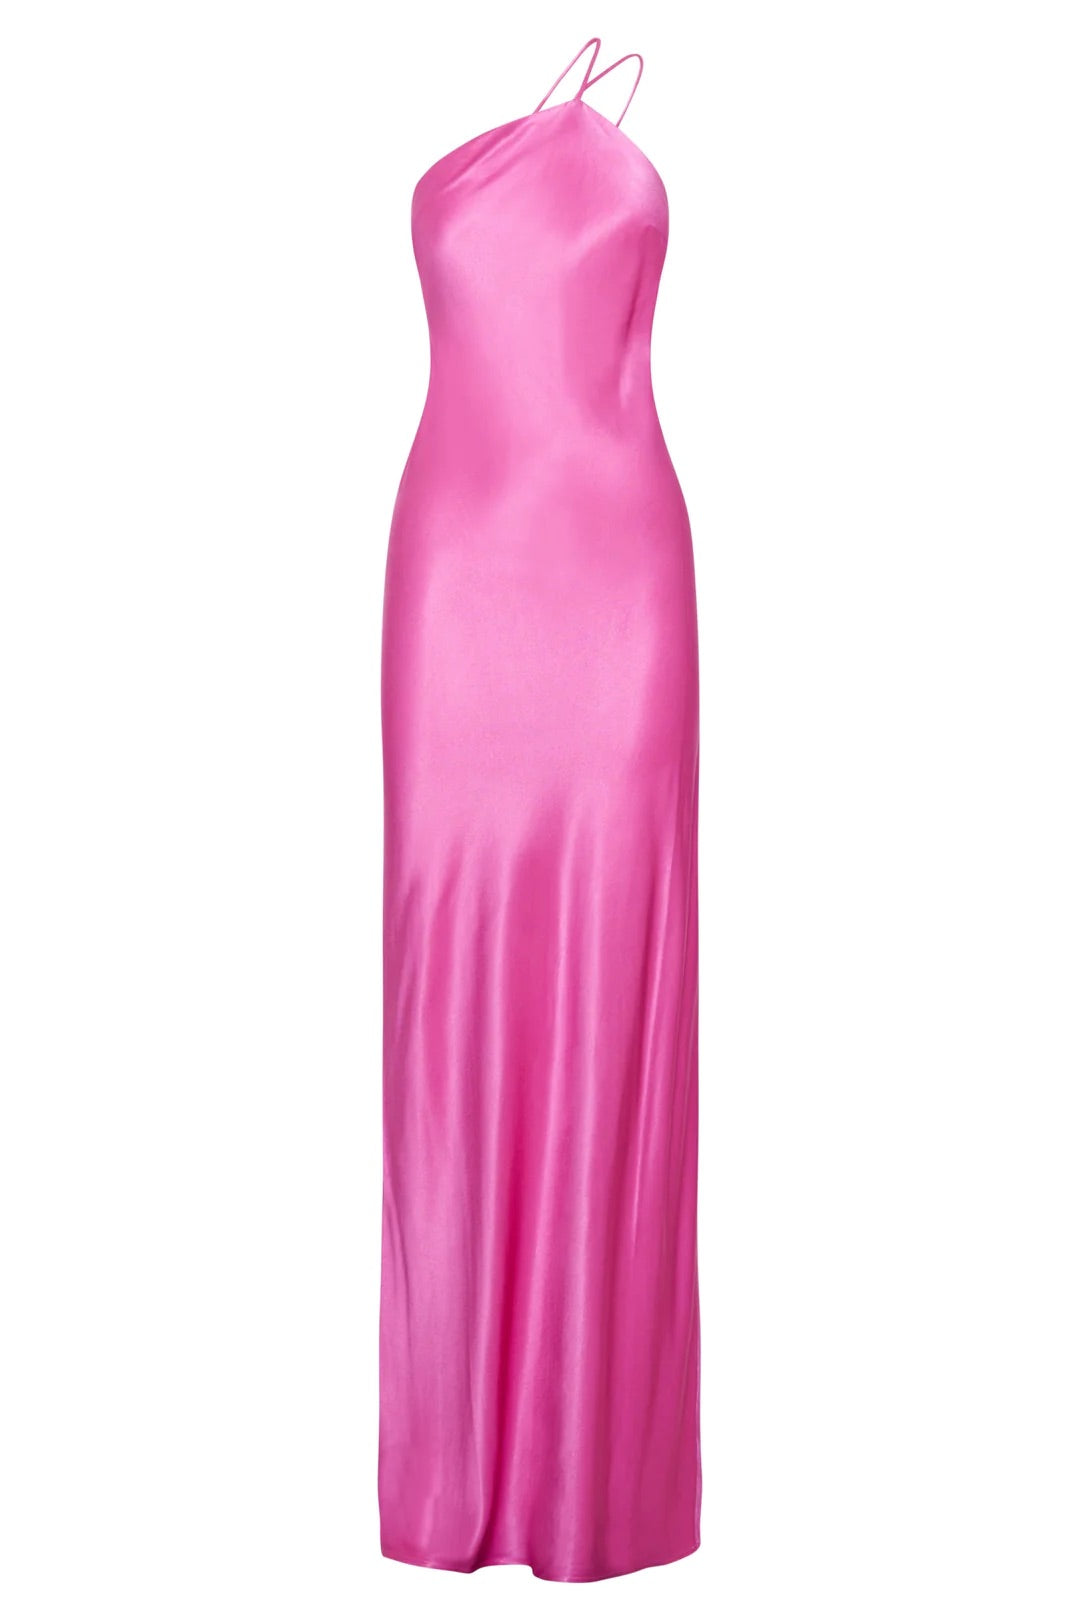 Meshki - Alena One Shoulder Maxi Dress in Pink